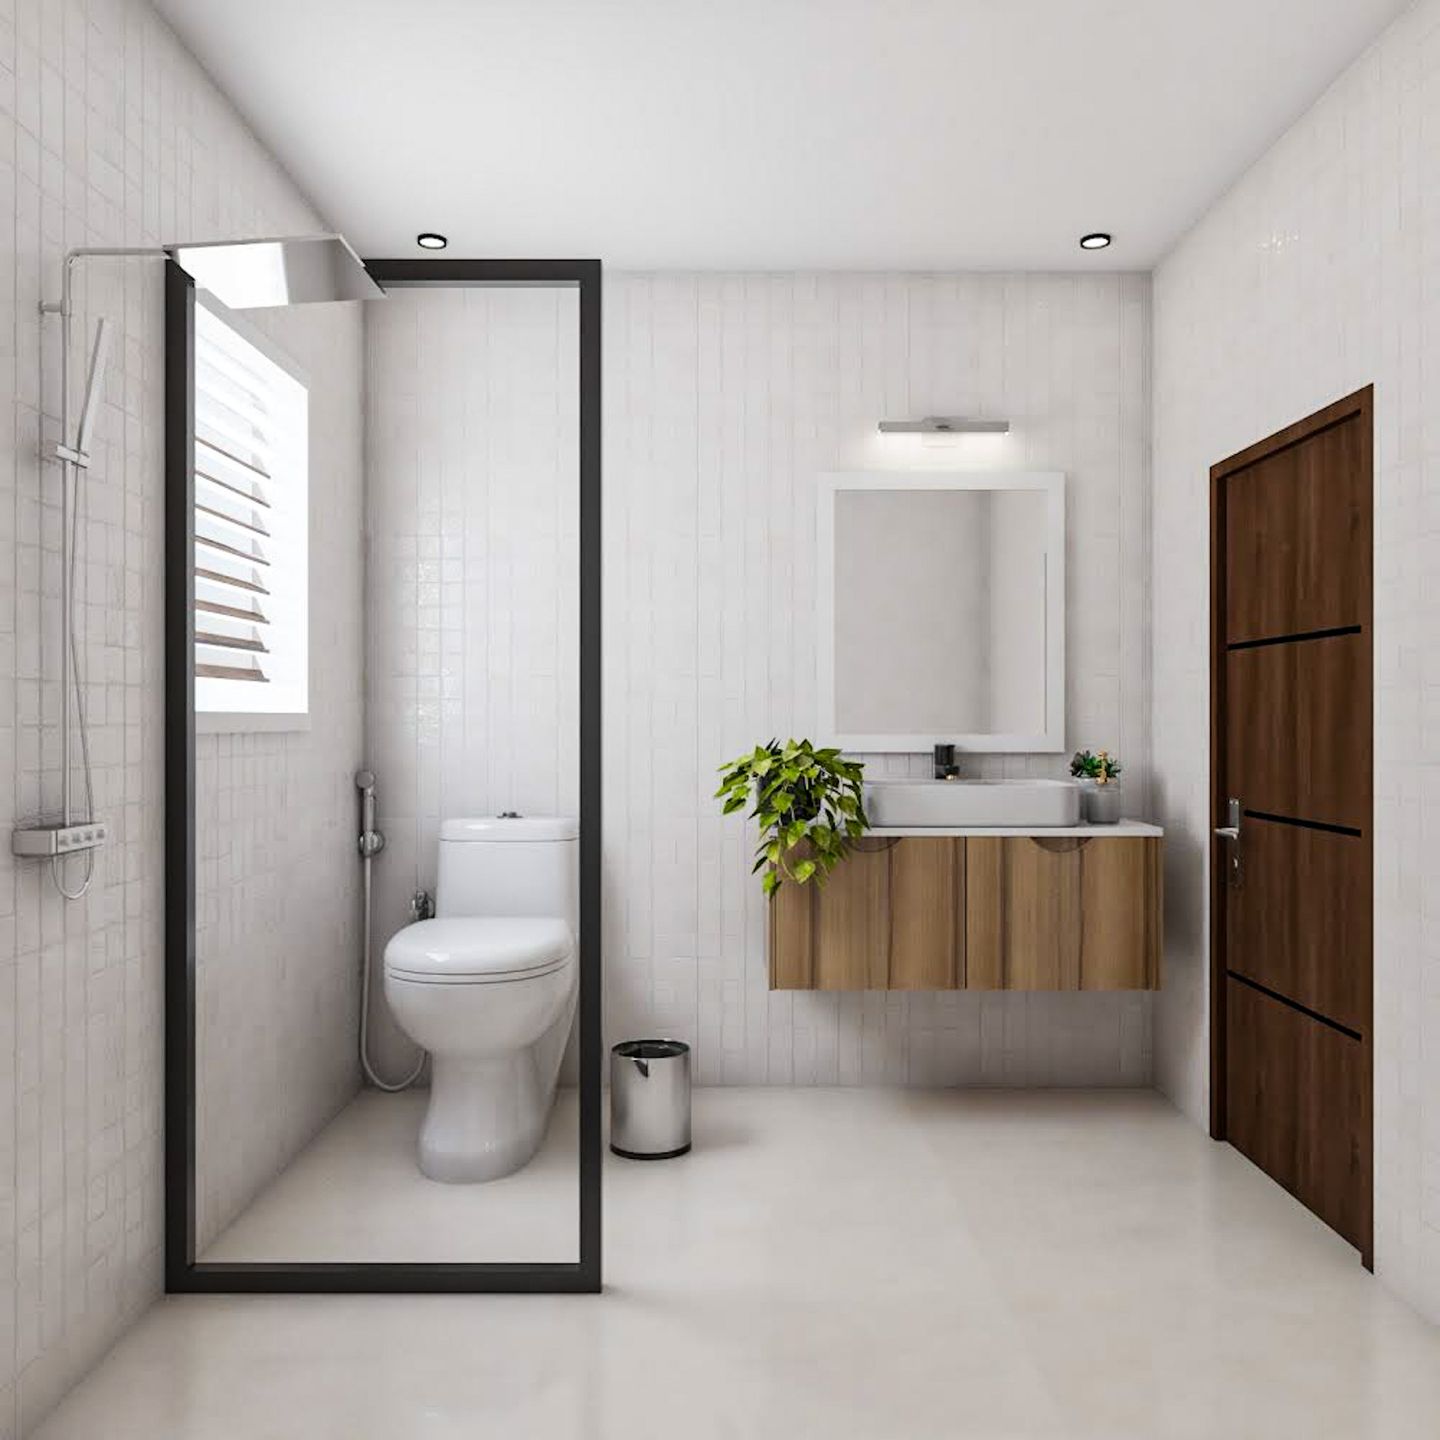 Bathroom Design With Wooden Vanity Unit And Rectangular Mirror - Livspace